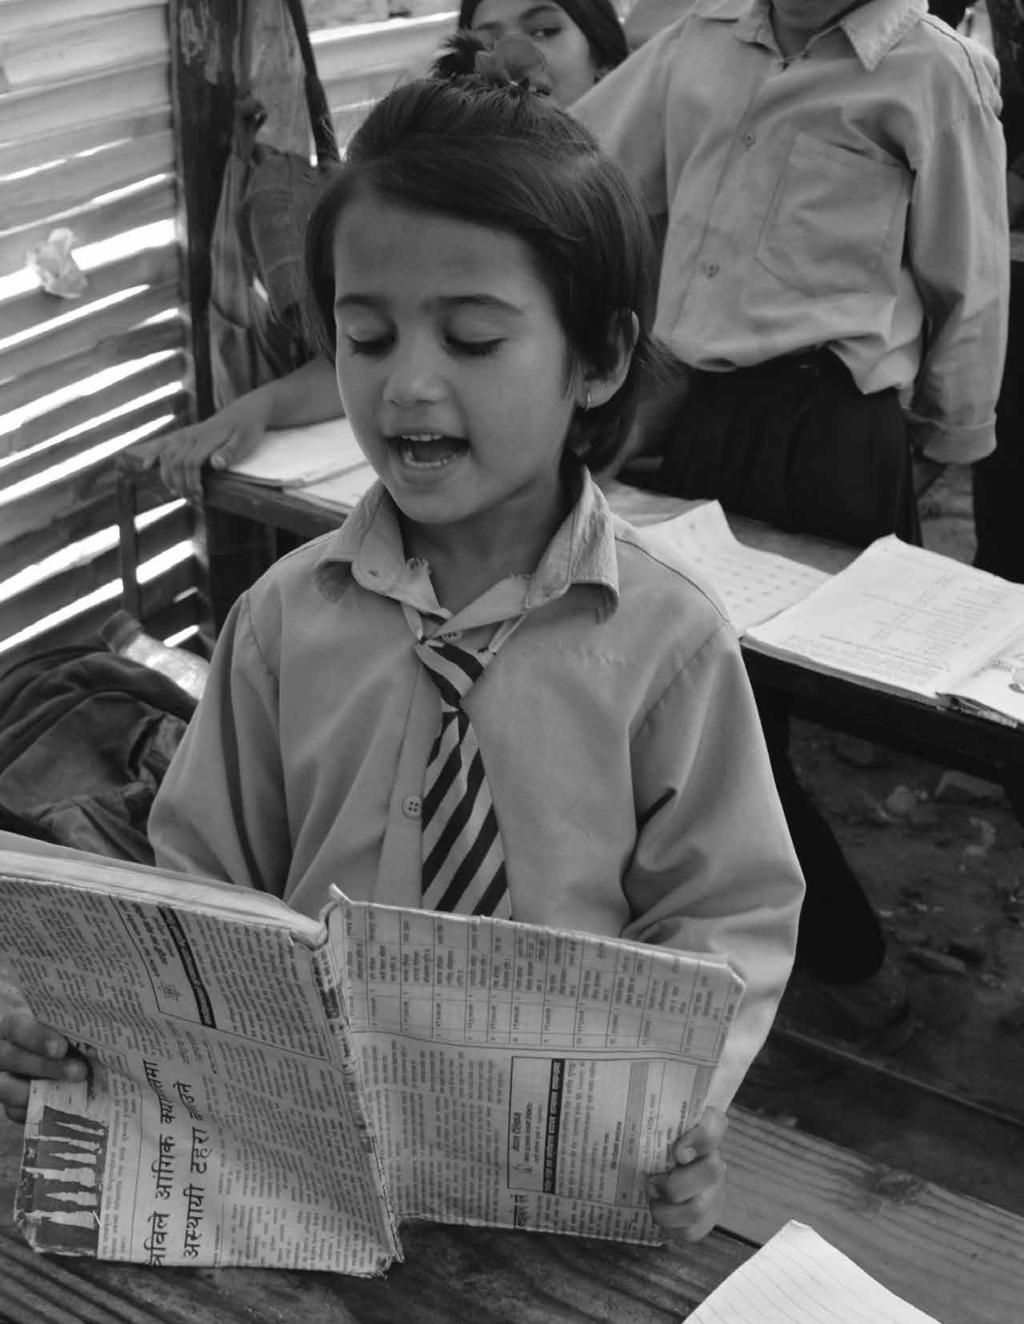 School girl at Shree Mahendrodaya